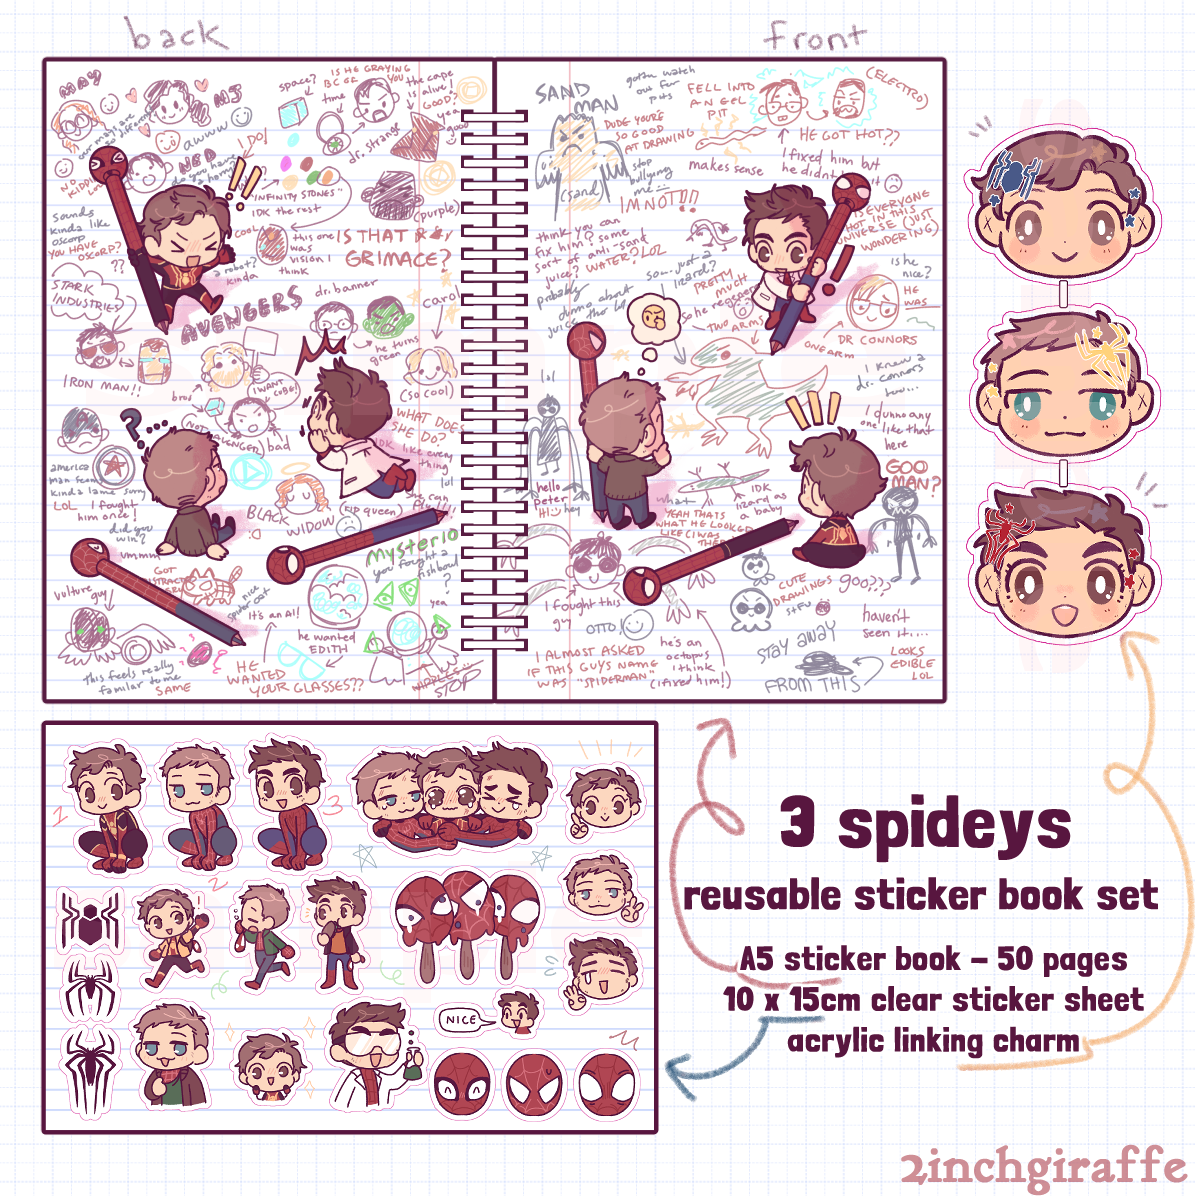 3 Spideys - Reusable Sticker Book Set